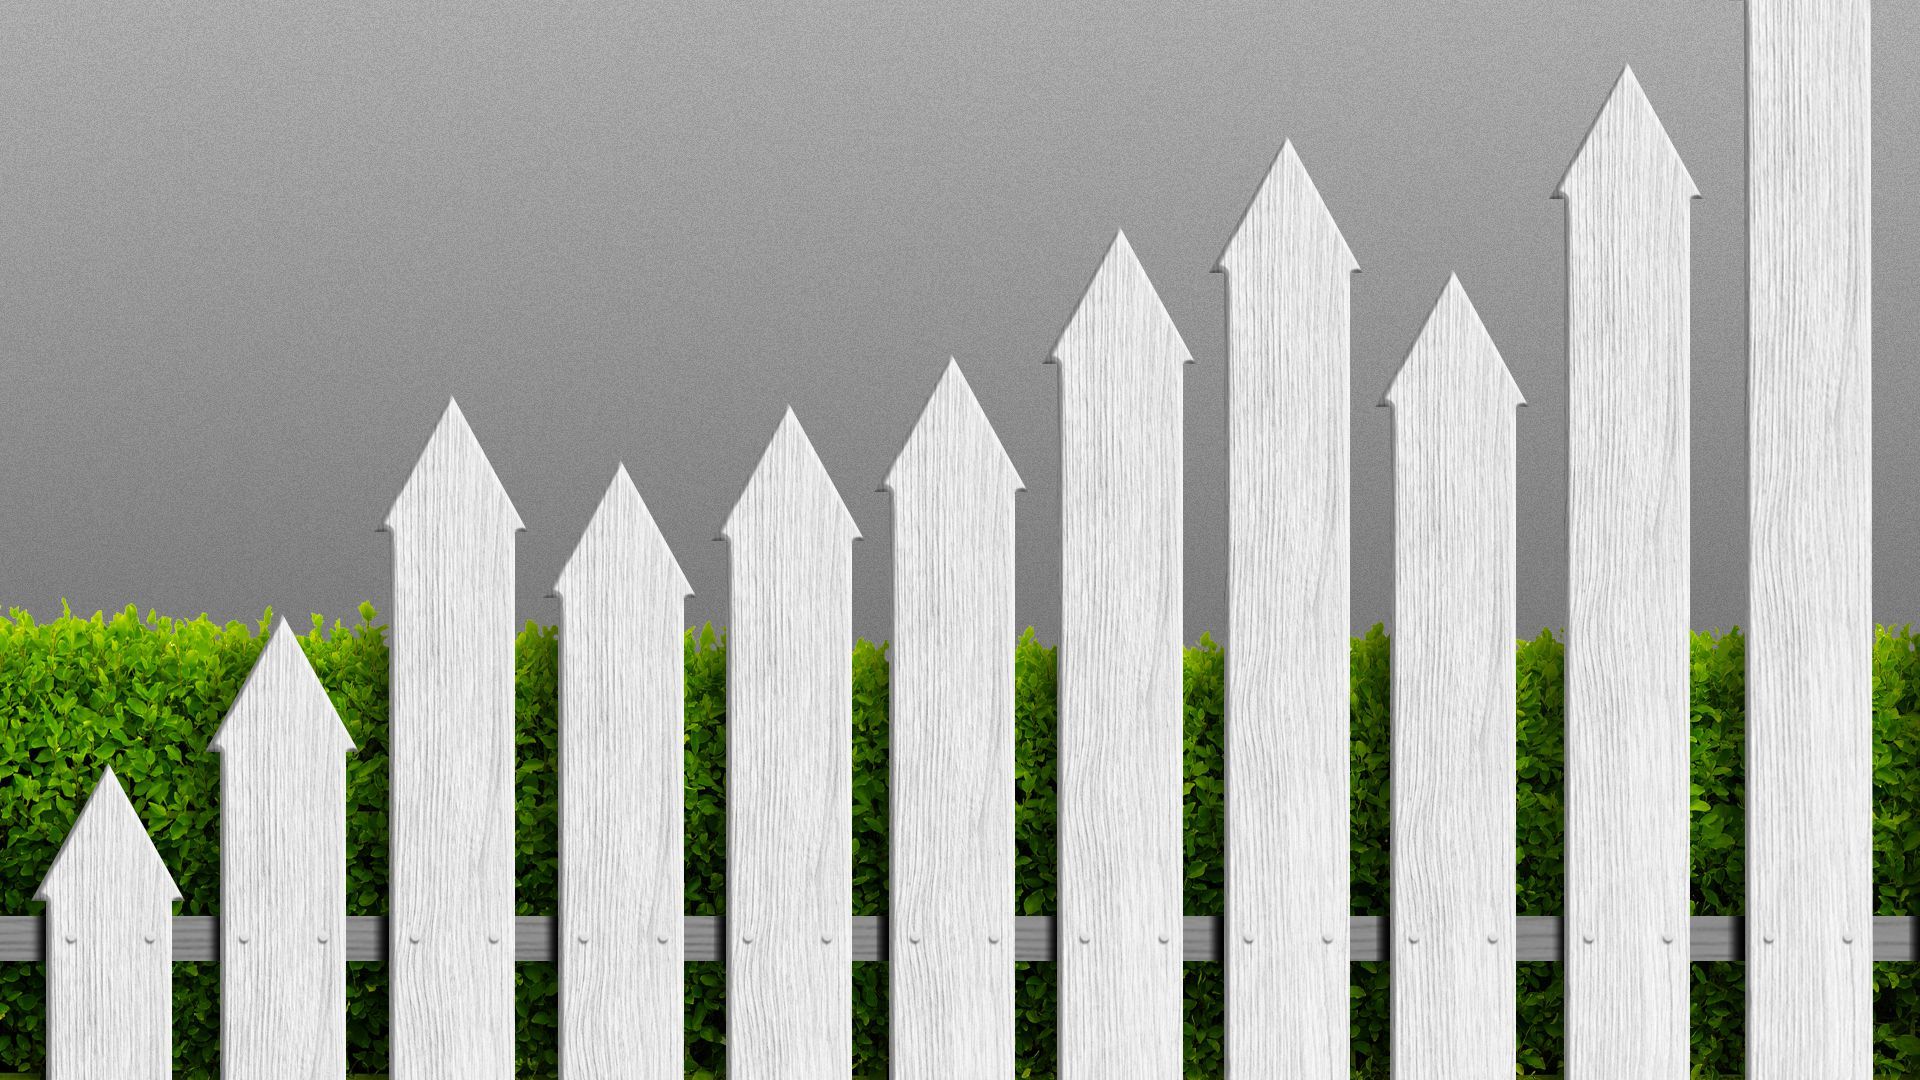 Illustration of a white picket fence shaped like arrows trending upwards